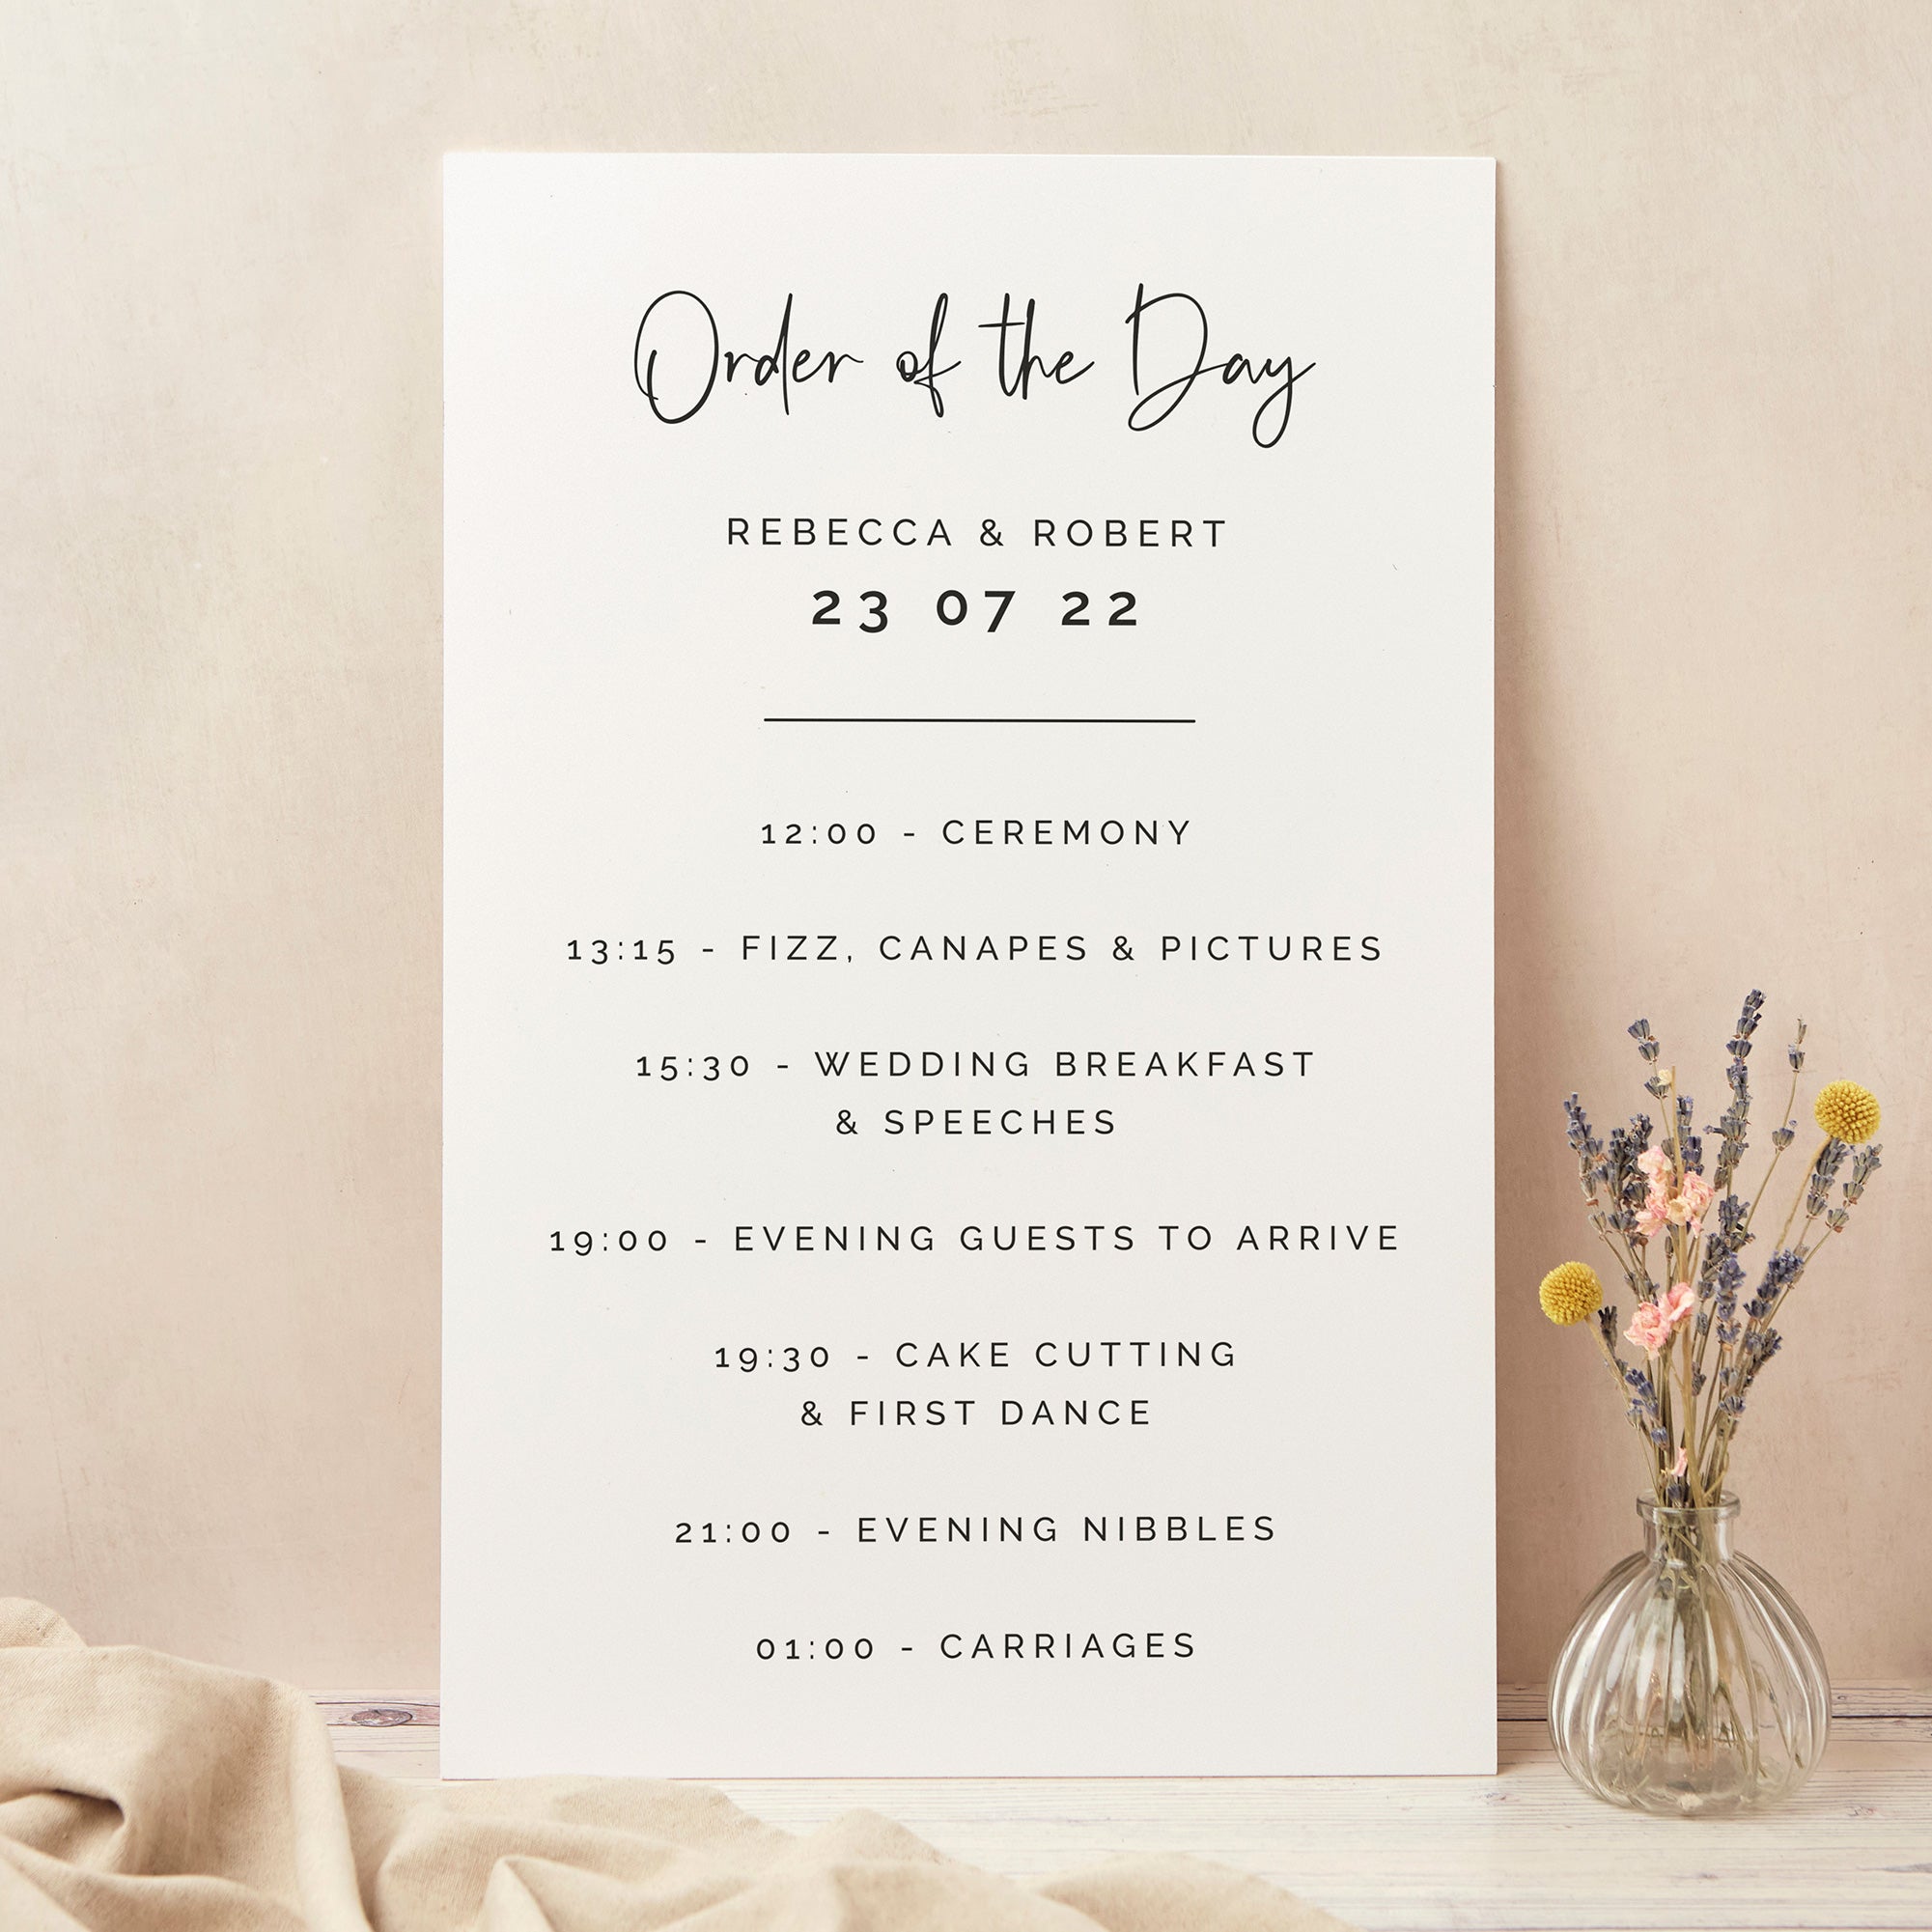 How to Cut Wedding Cake – LDS Wedding Receptions